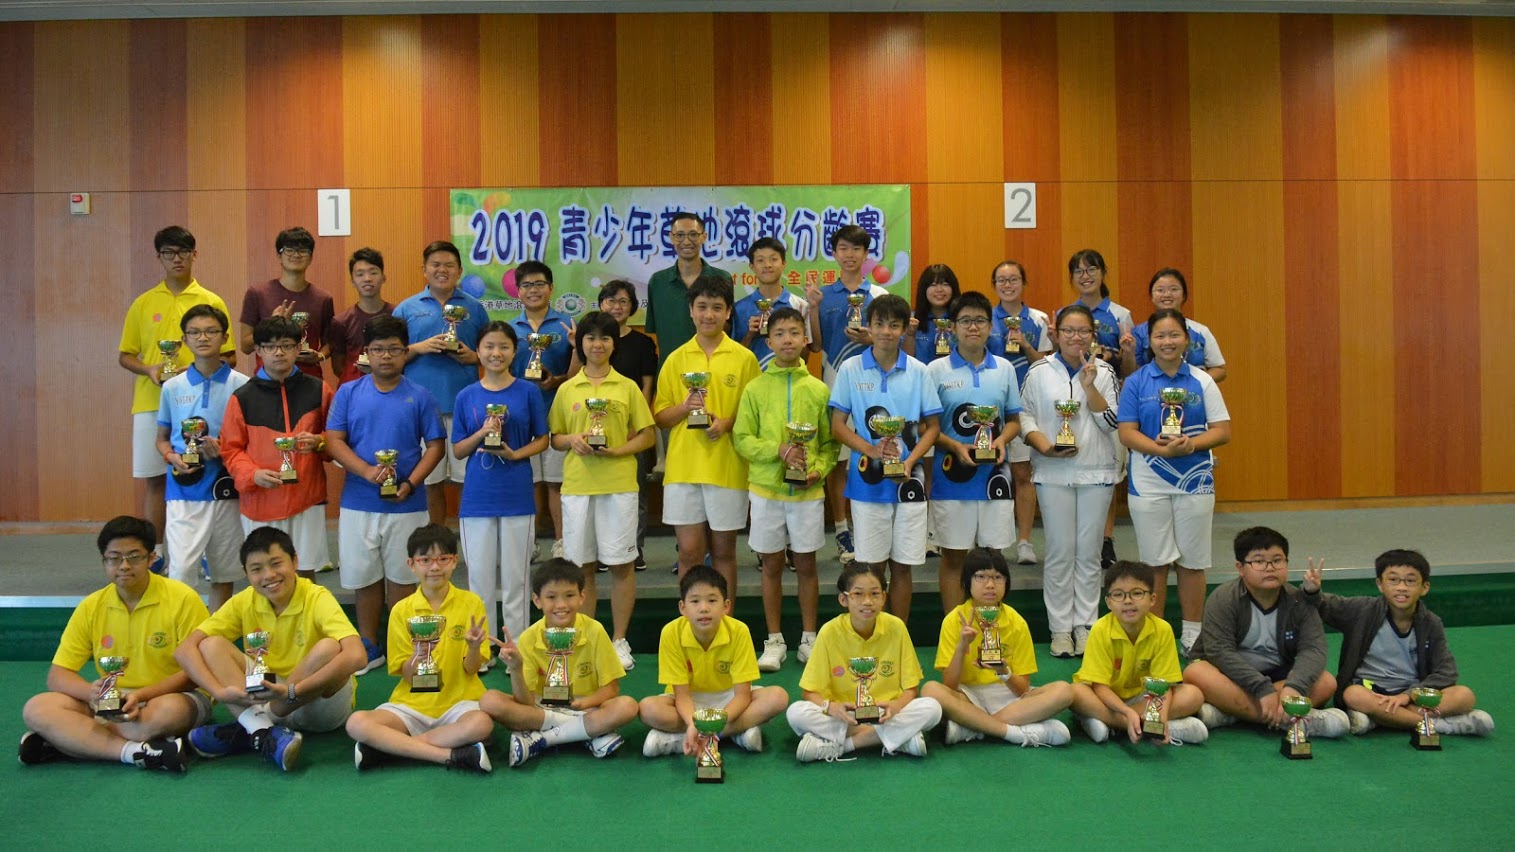 Photo Link – Hong Kong Under 25 Age Group Championships 2019 held 21st July